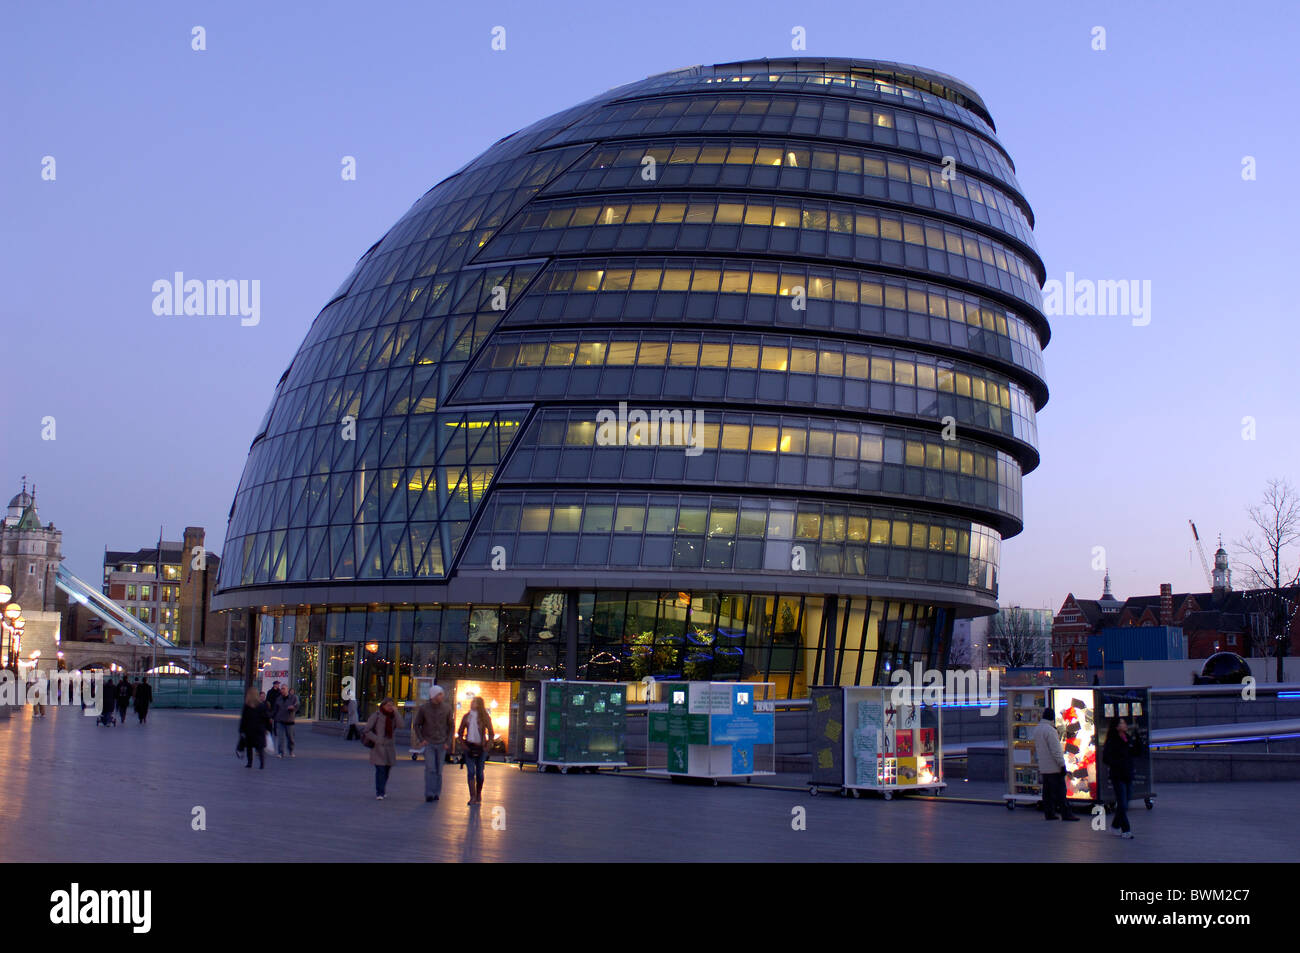 UK London City Hall Greater London Authority Great Britain Europe United Kingdom England Europe Architecture Stock Photo